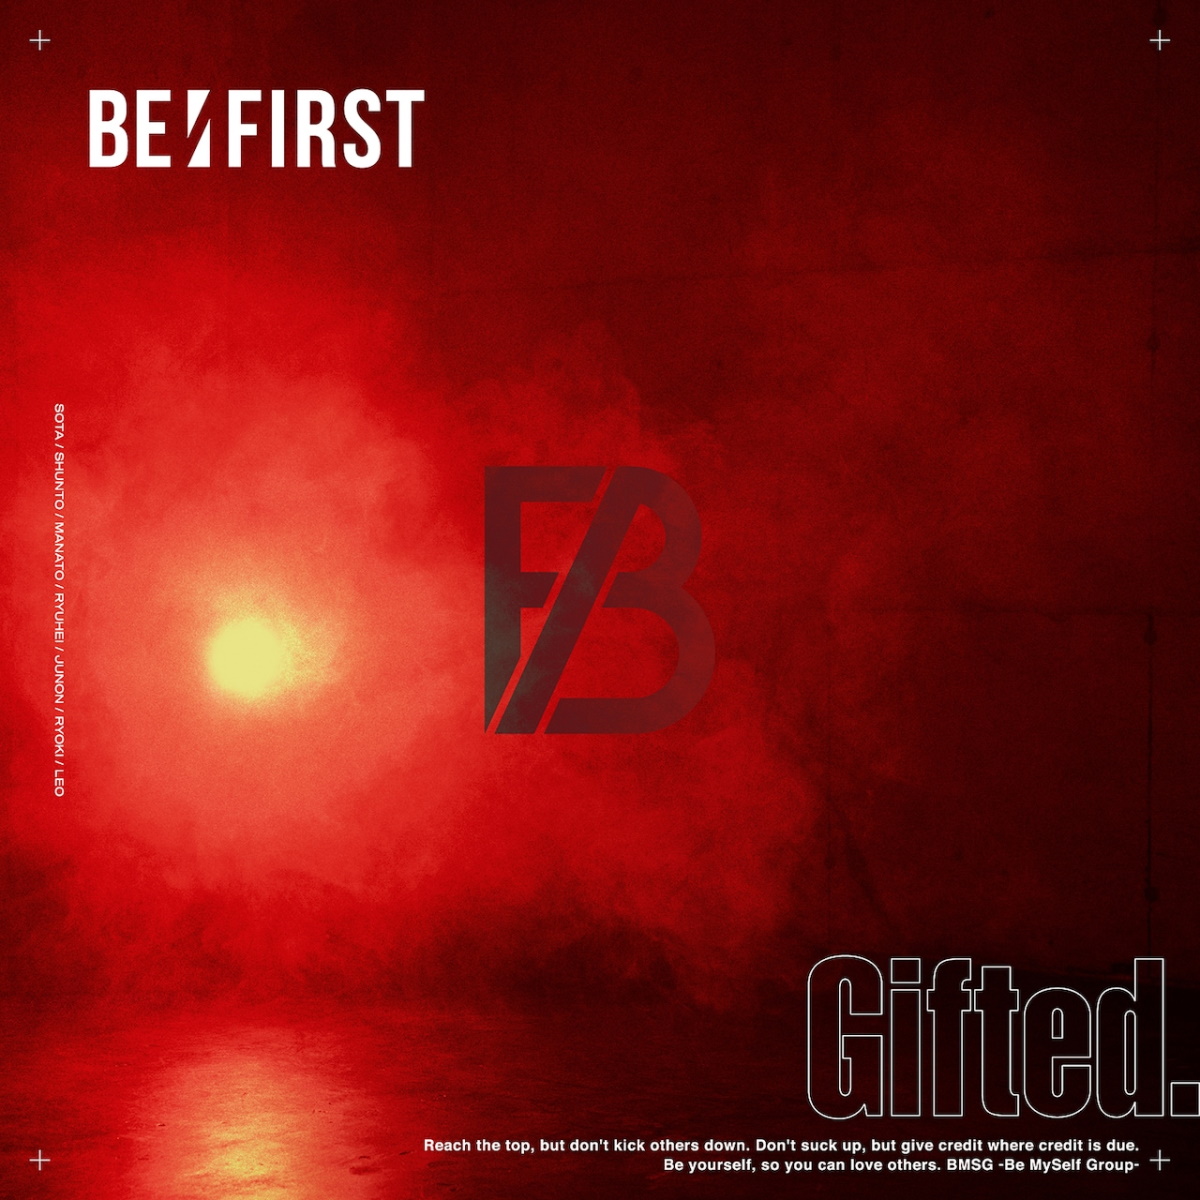 BE:FIRST(ビーファースト)Gifted.(ギフテッド)をデビュー曲にした理由と想い